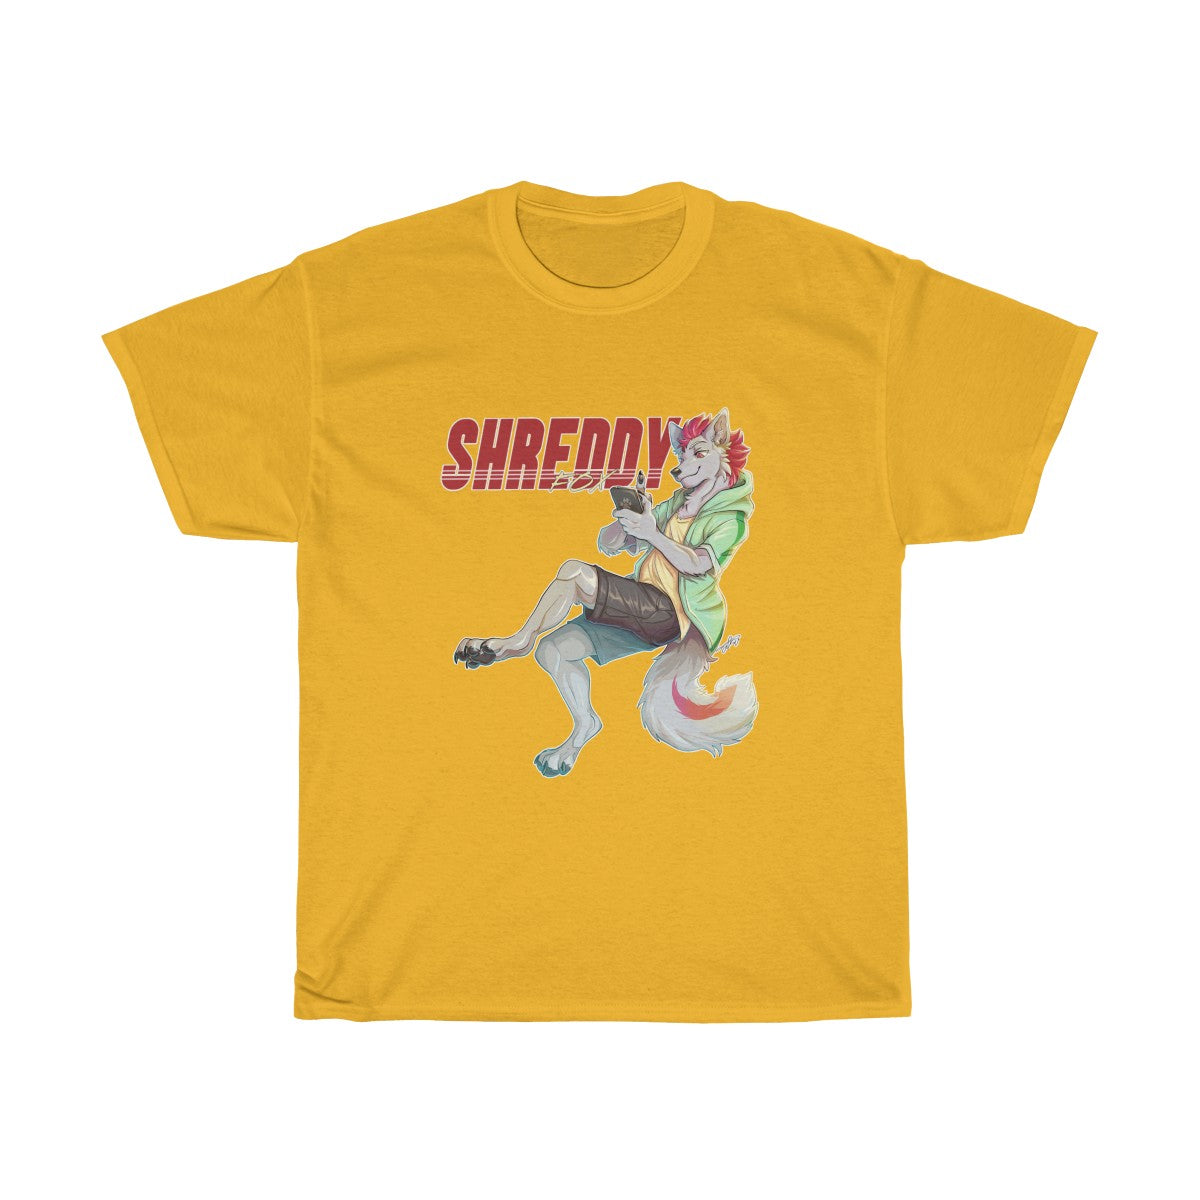 Scrolling - T-Shirt T-Shirt Shreddyfox Gold S 